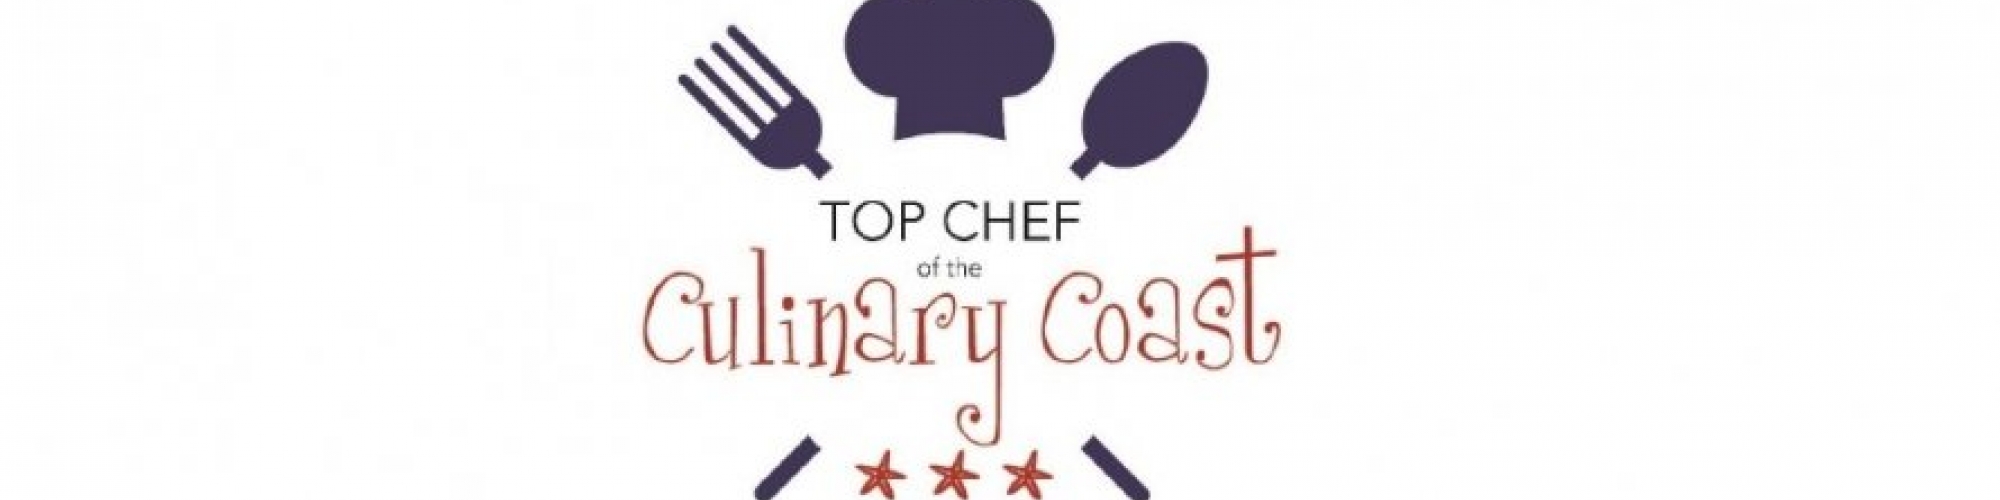 Top Chef of the Culinary Coast™ Hero Image